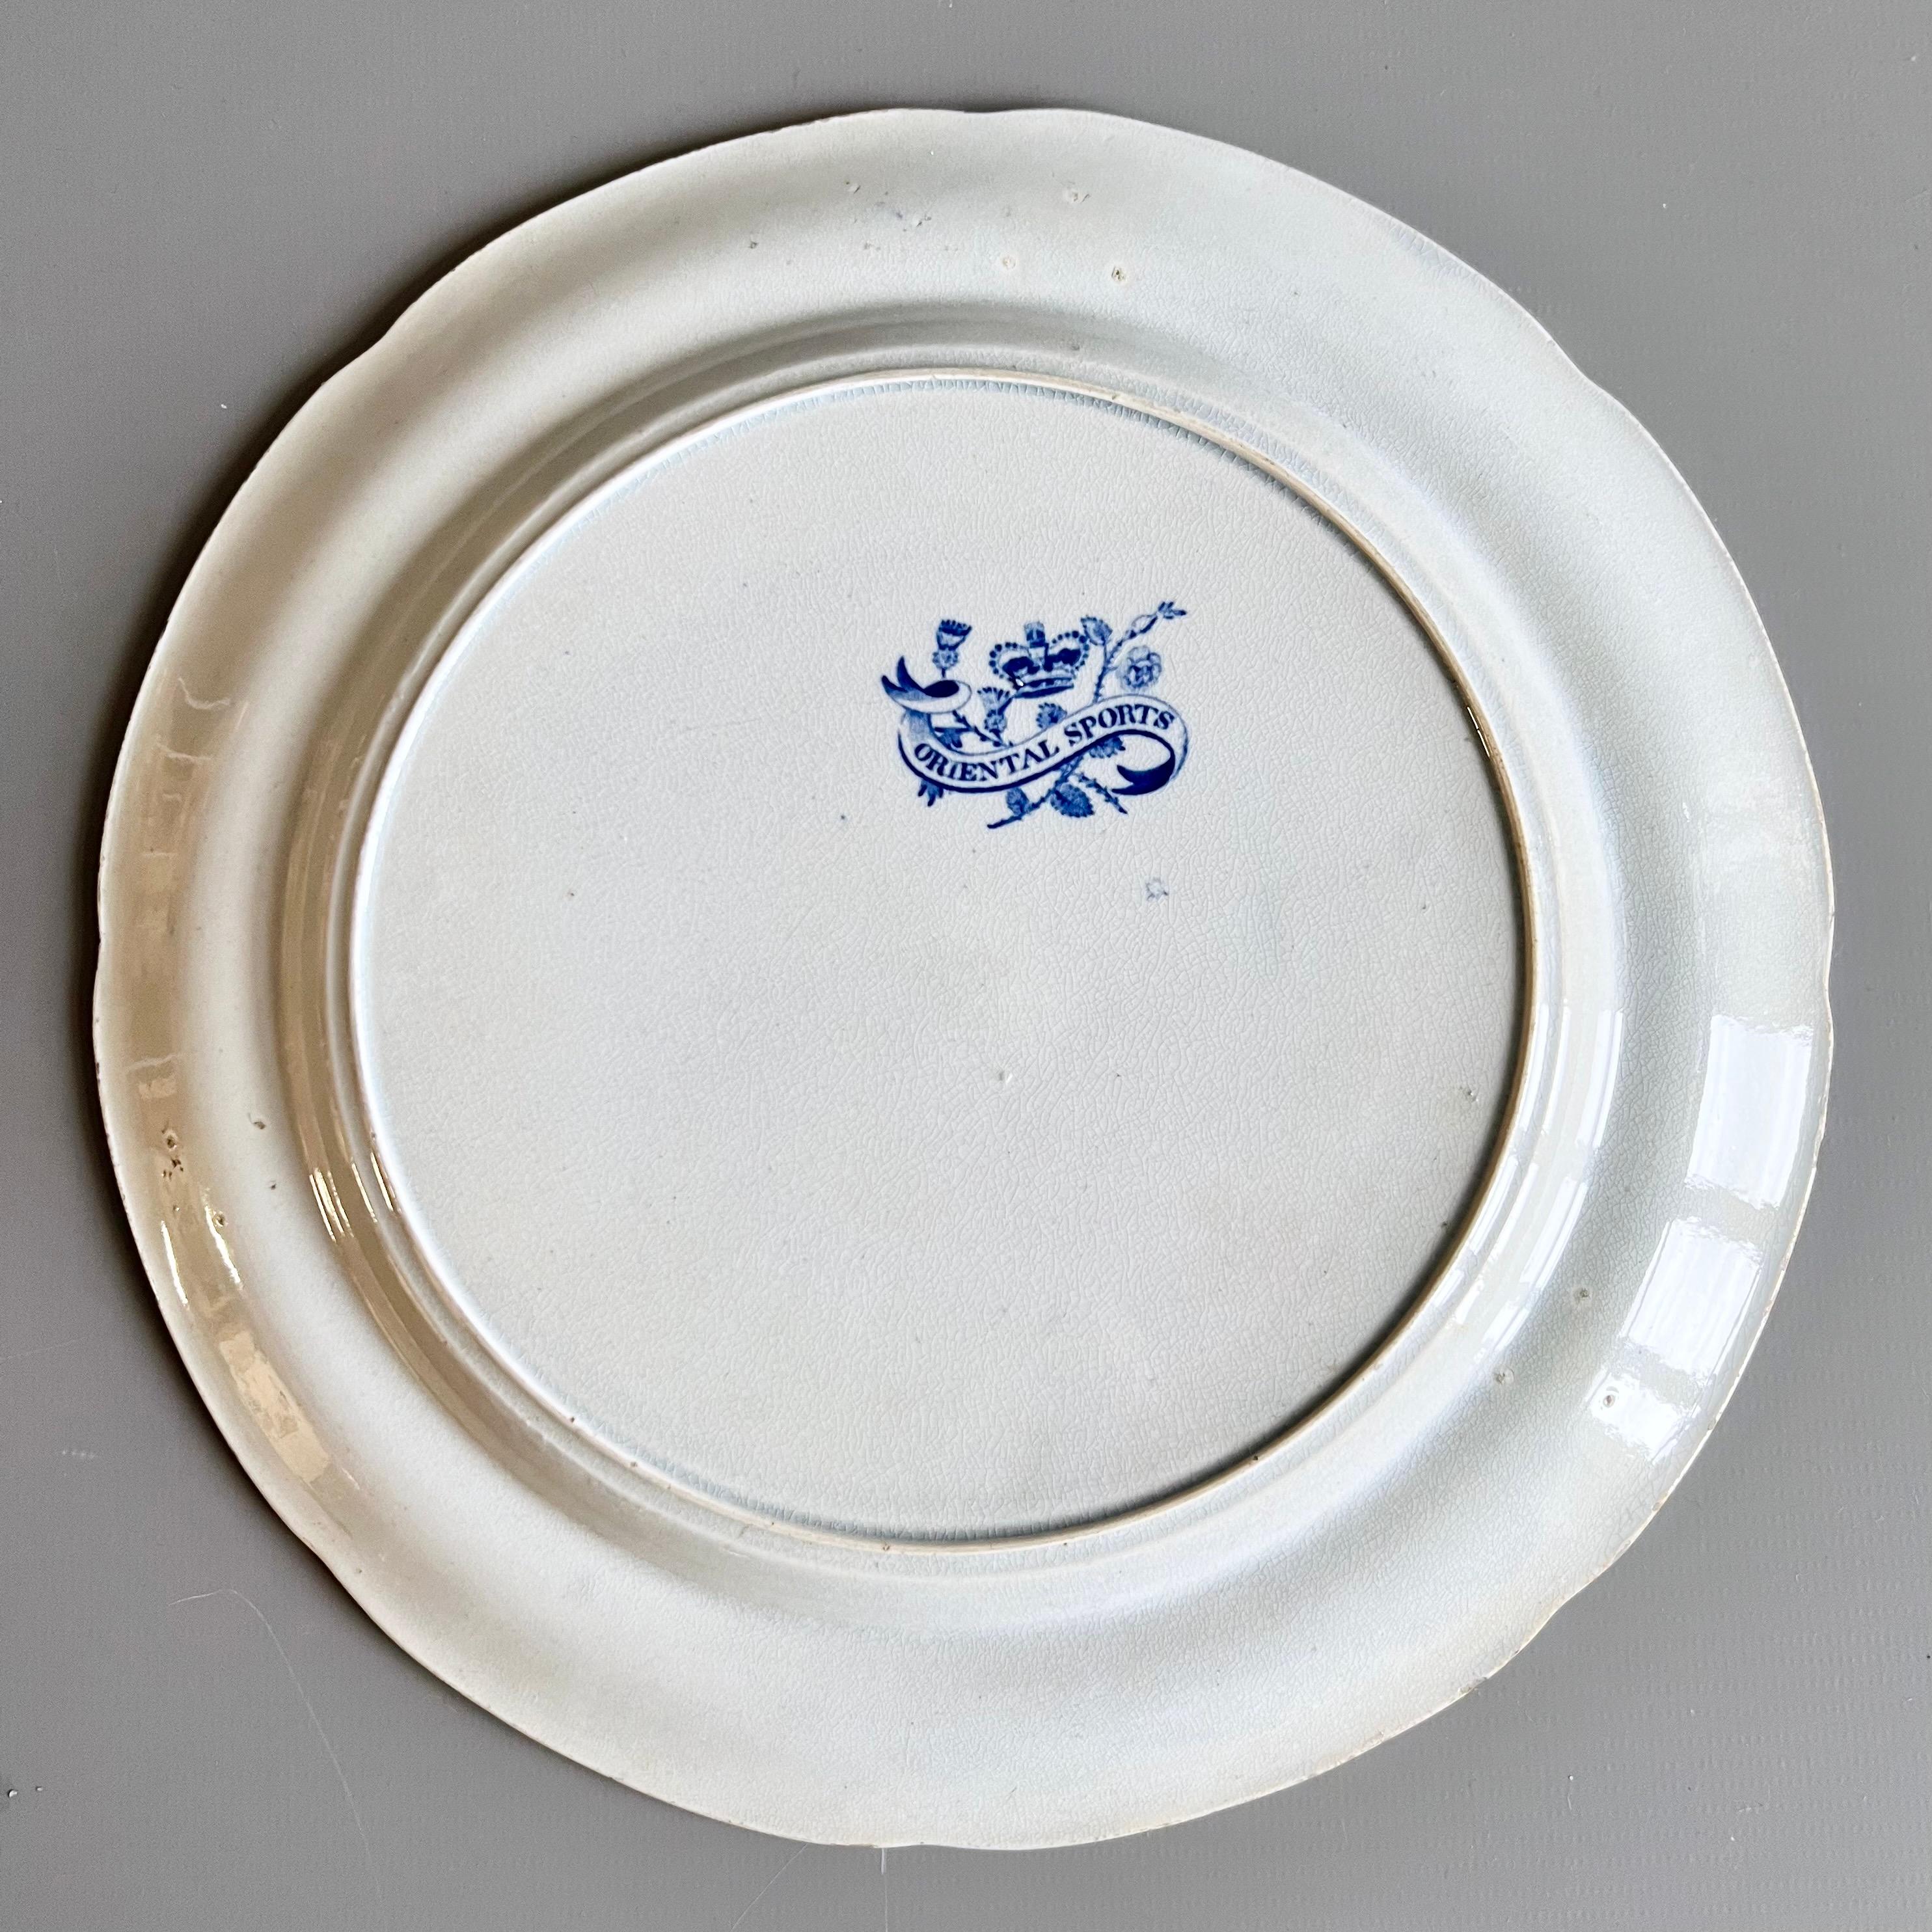 Assiette en faïence d'Edward Whiting, bleu et blanc 